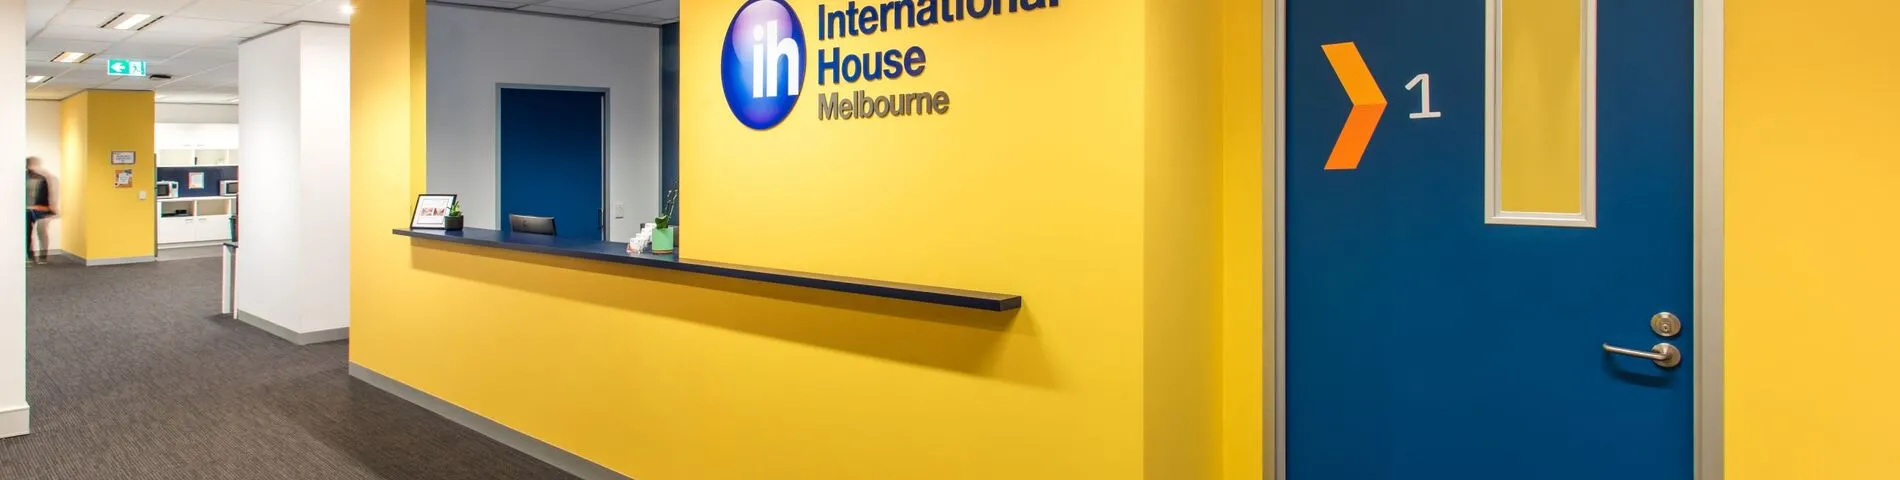 International House afbeelding 1